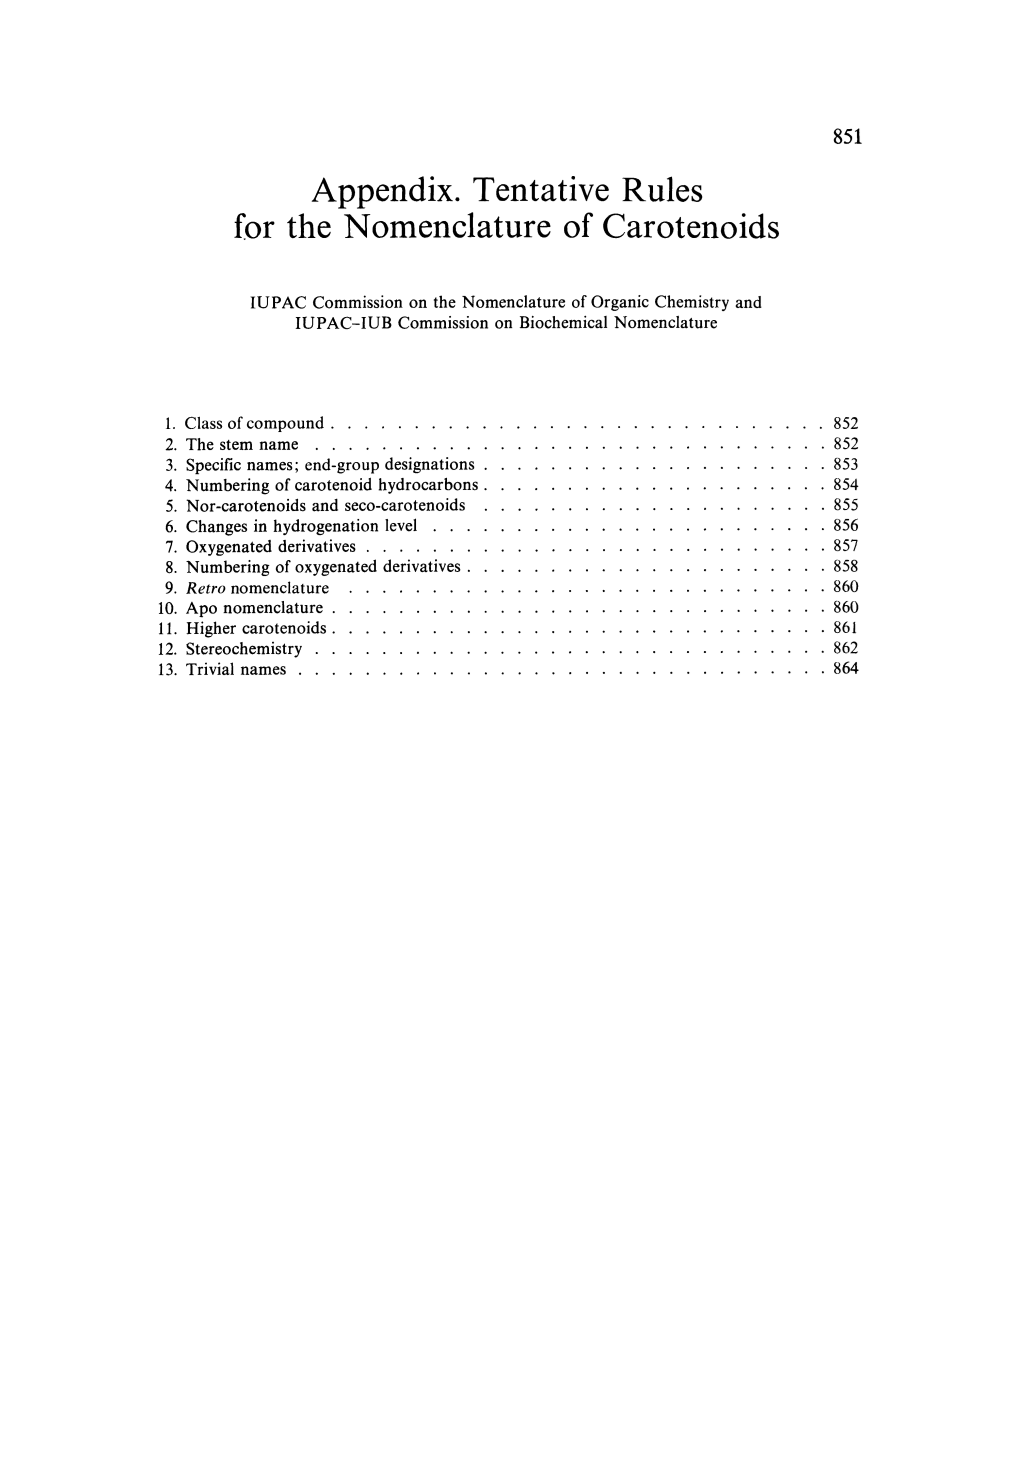 Appendix. Tentative Rules for the Nomenclature of Carotenoids